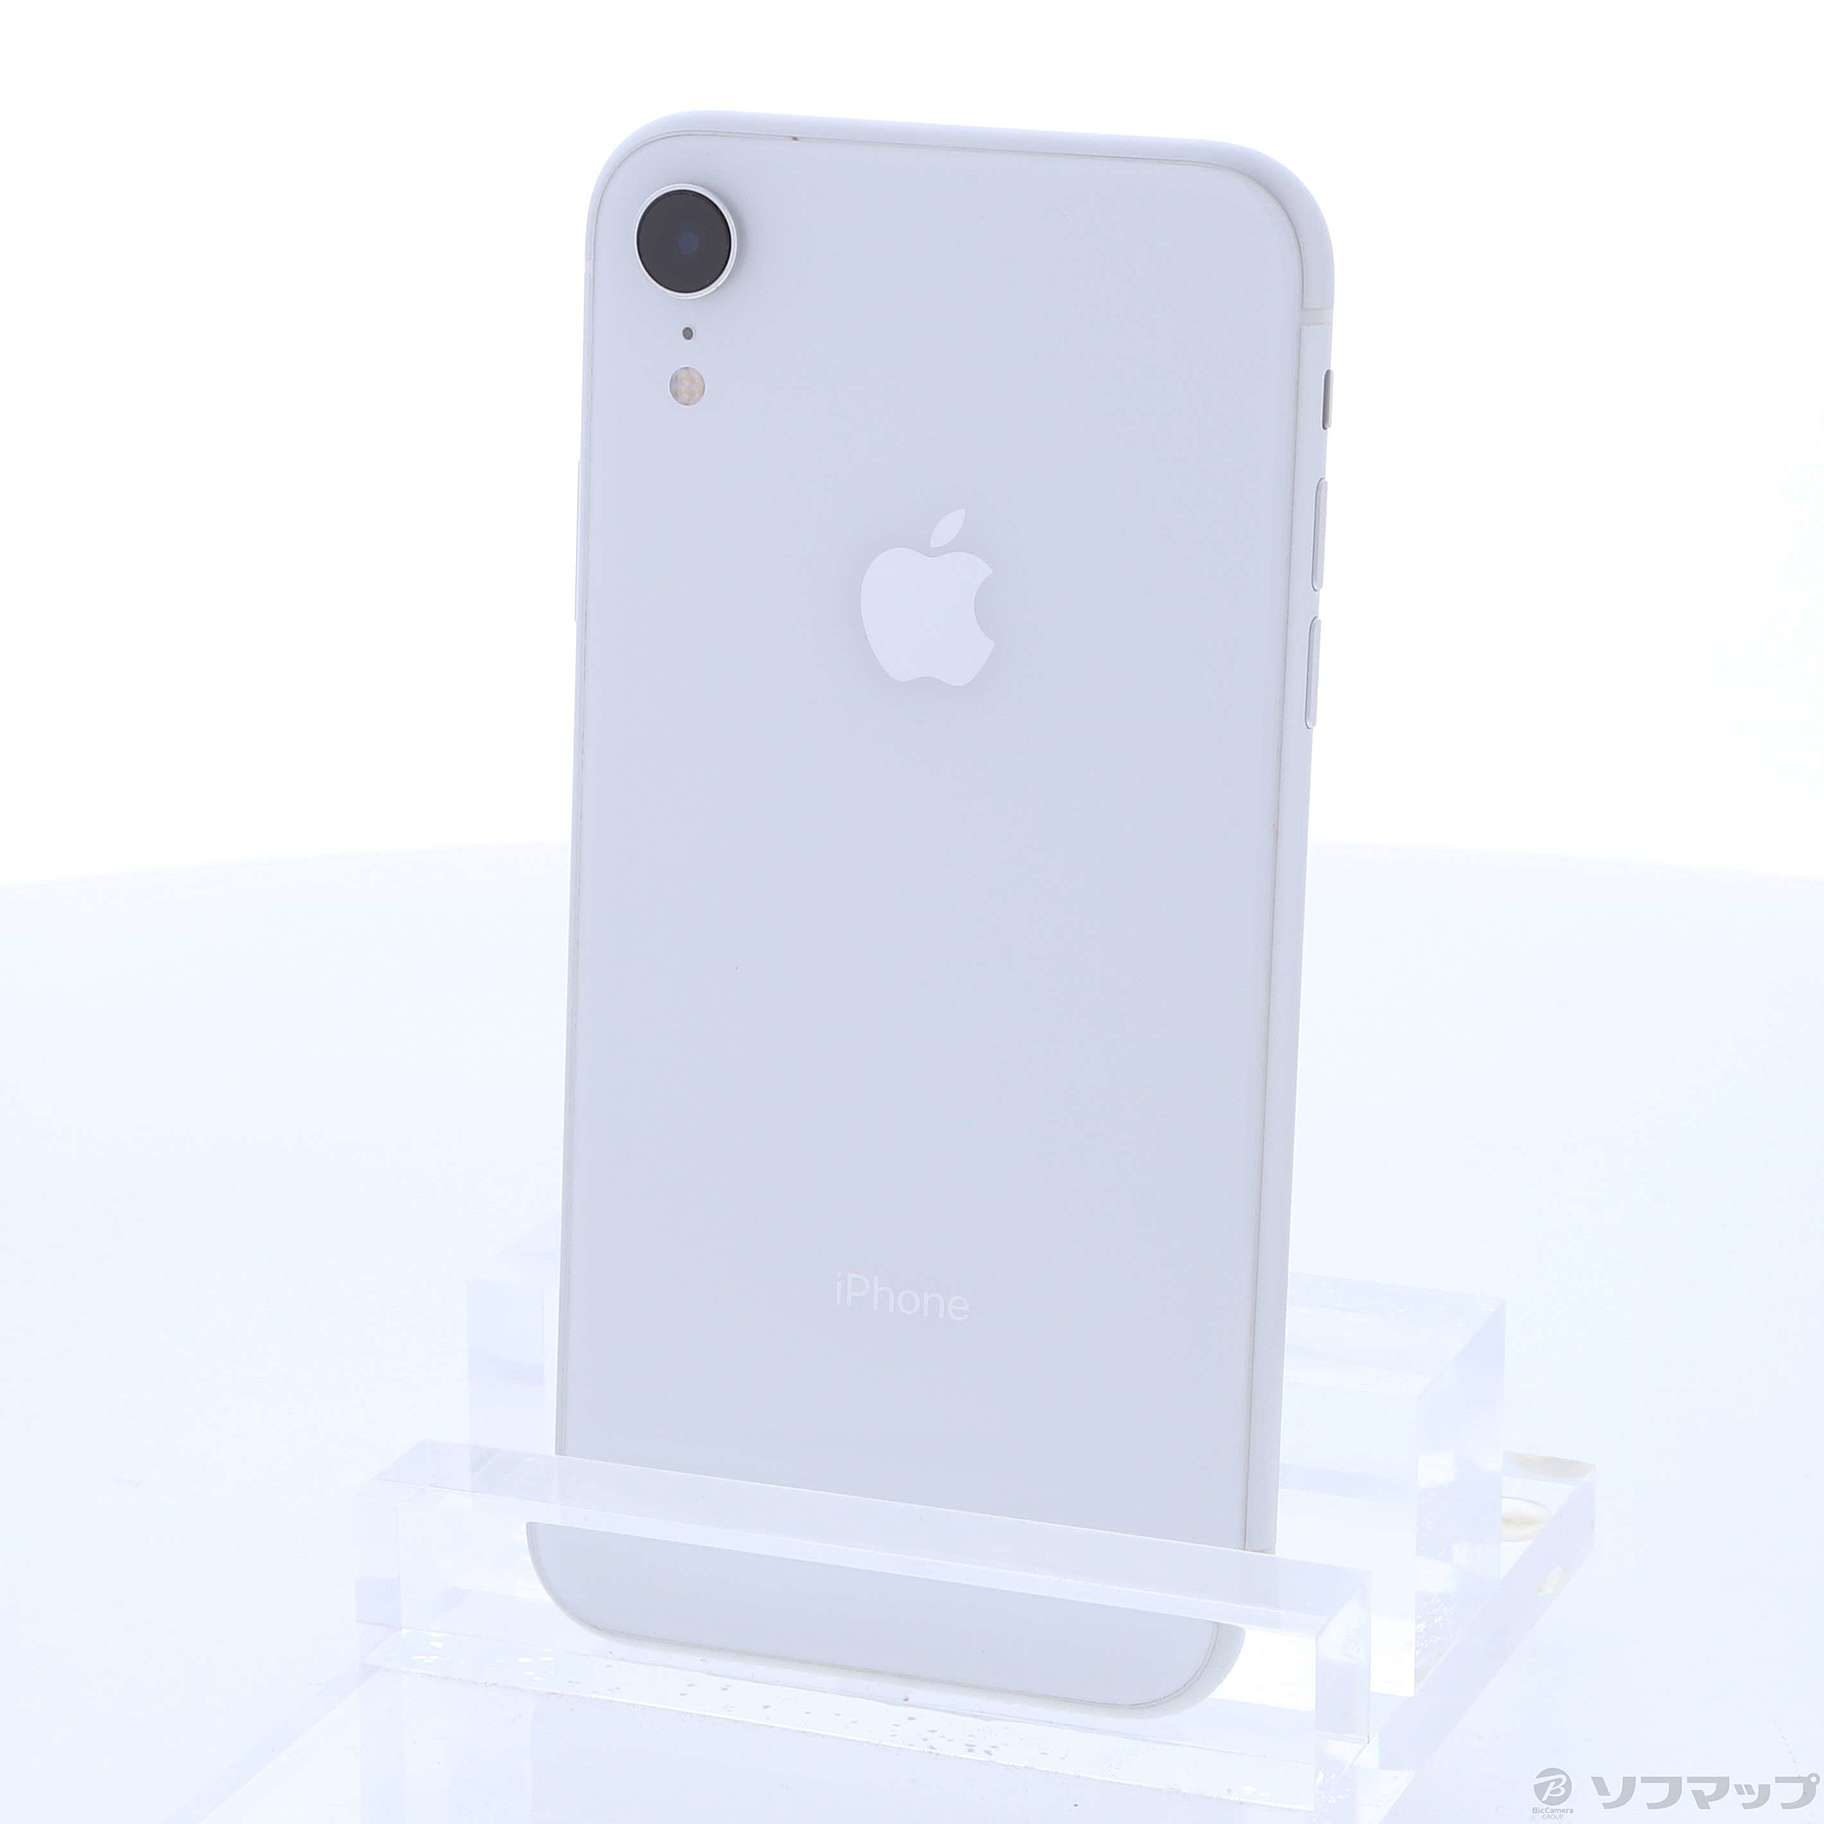 iPhoneXRiPhoneXR 256GB 青 - スマートフォン本体